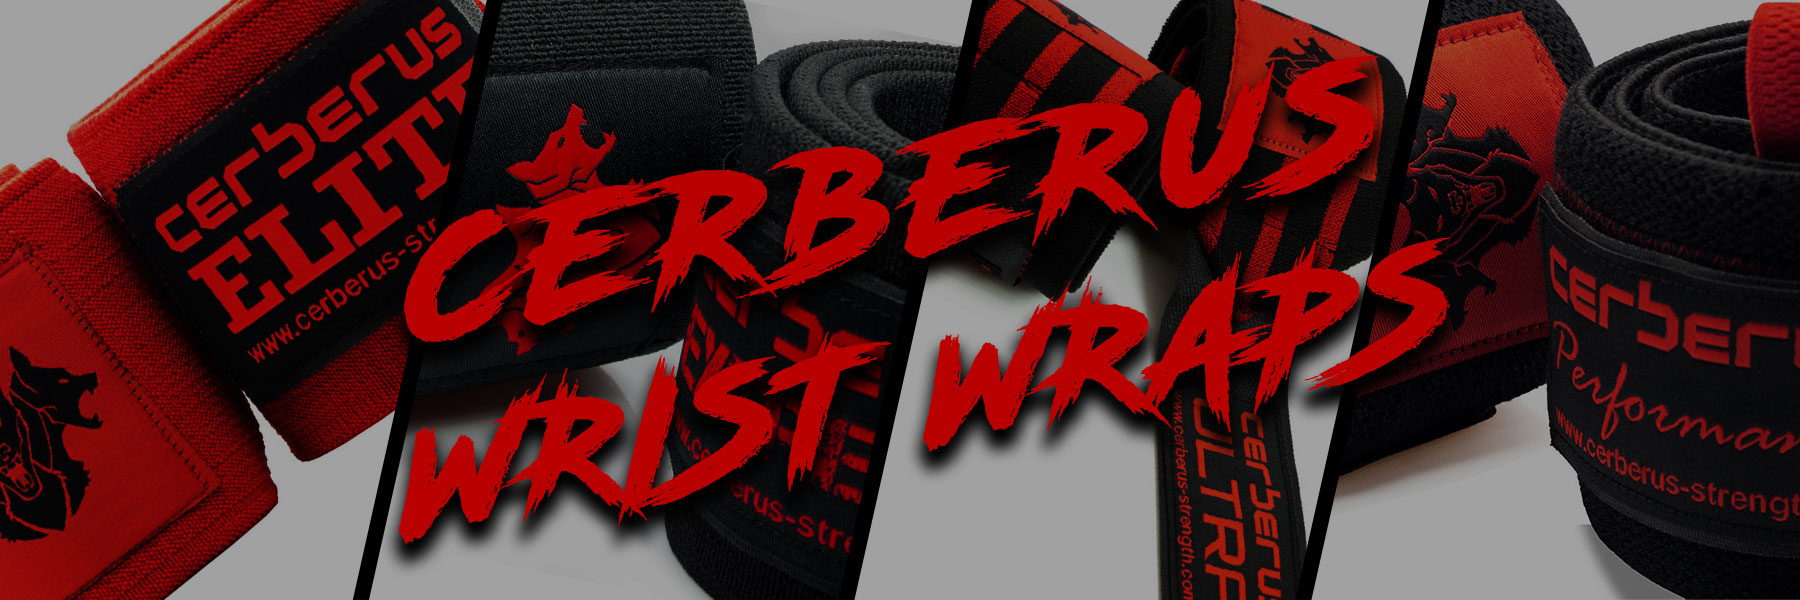 CERBERUS Elite Wrist Wraps – CERBERUS Strength